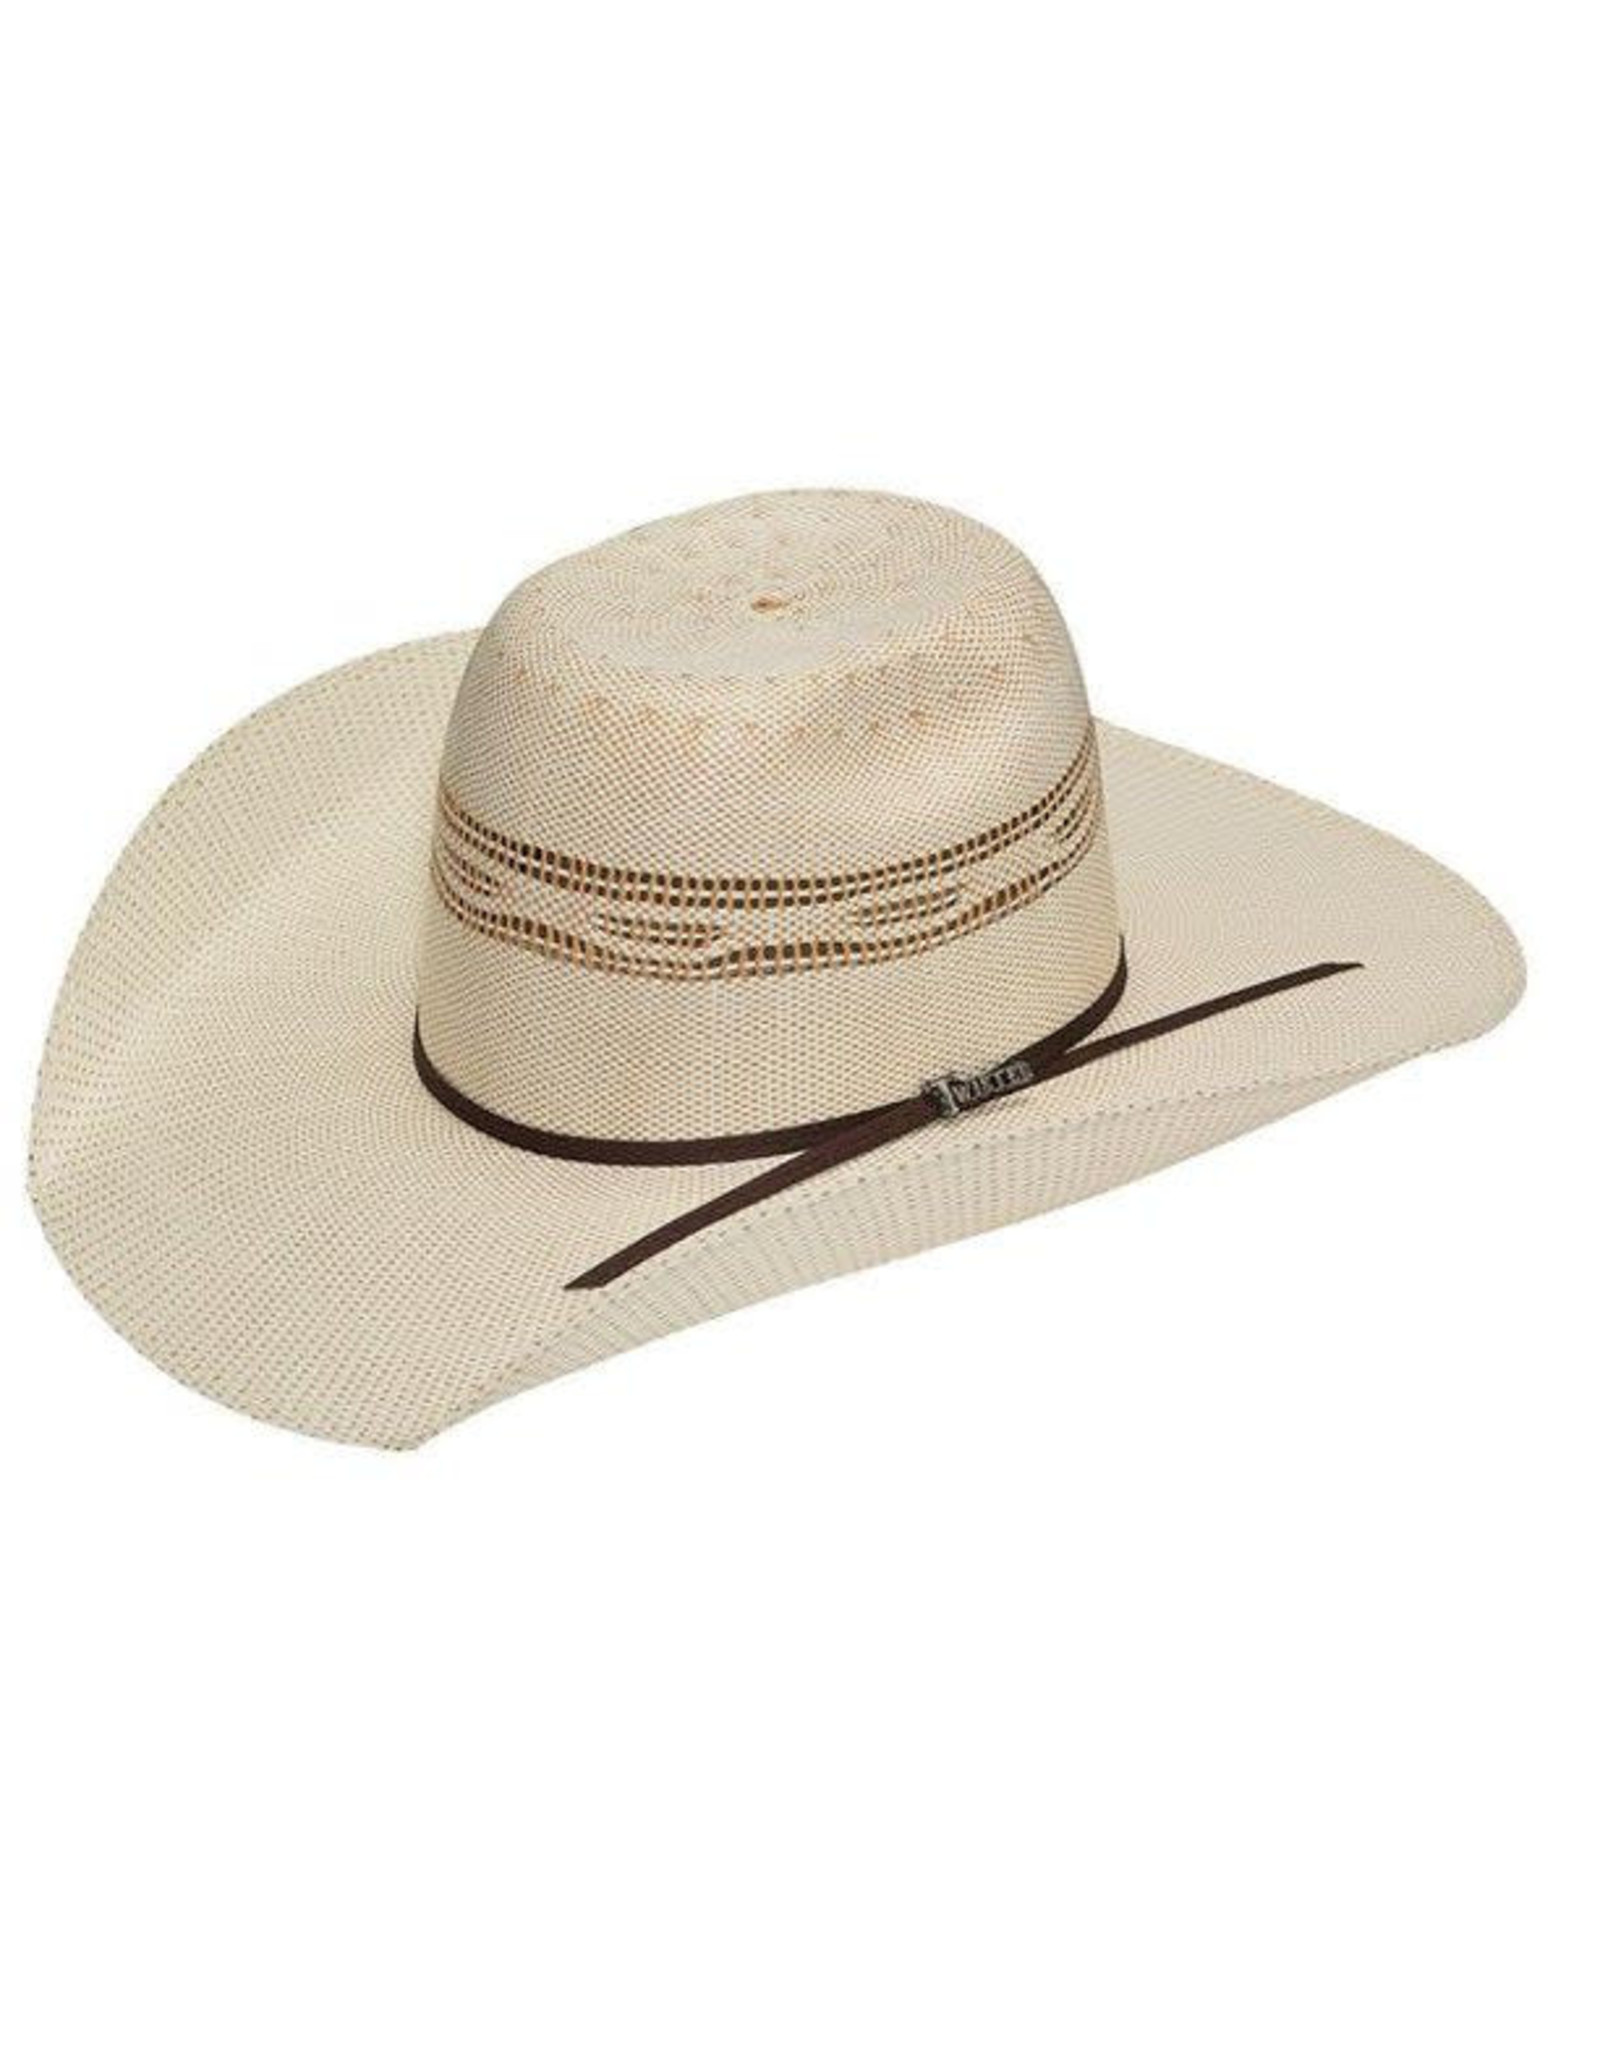 Twister Bangora Punchy T73528 Straw Hat